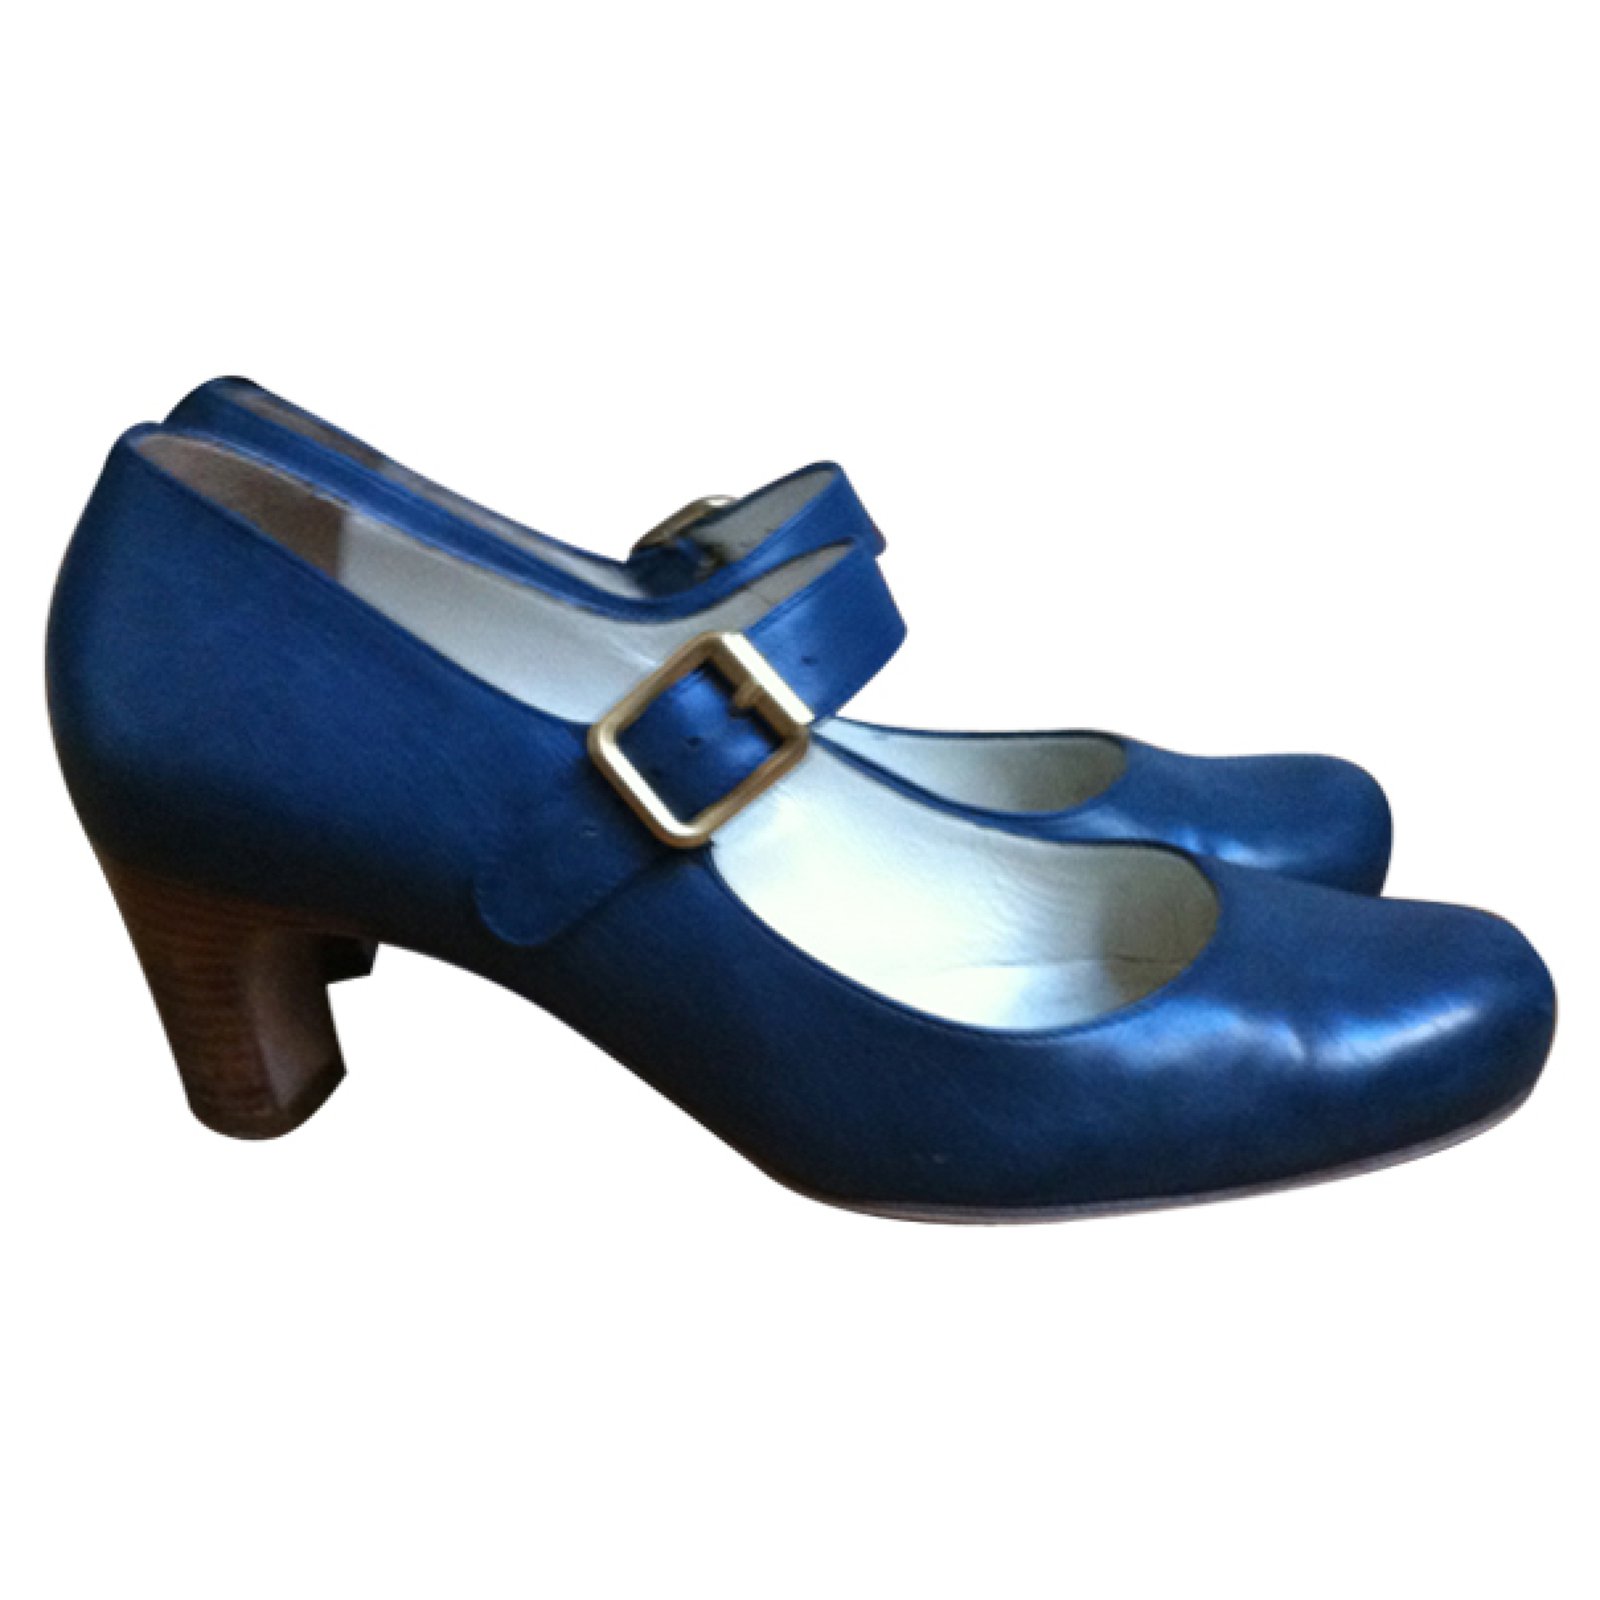 blue small heels